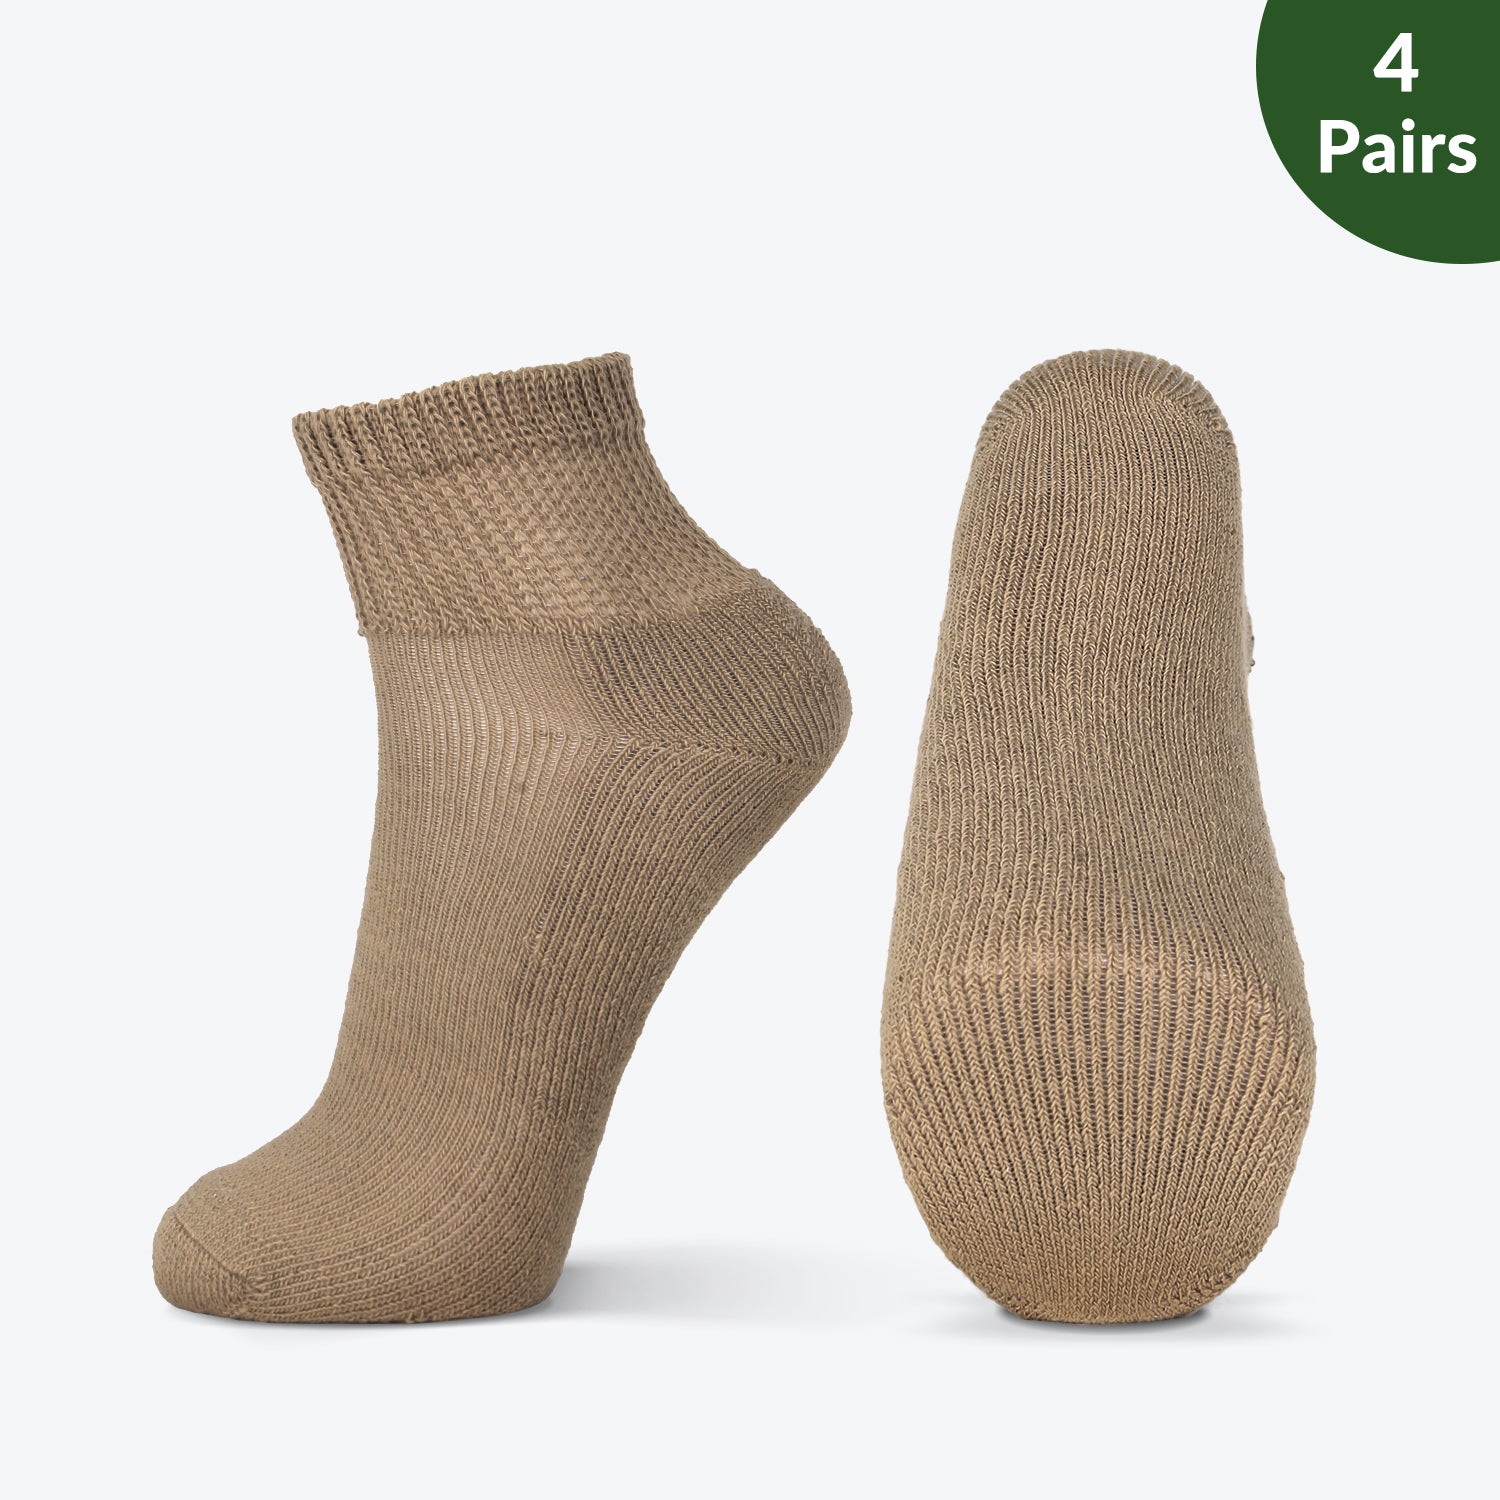 Ankle Socks Non Binding Top for Swollen Feet 4 Paris